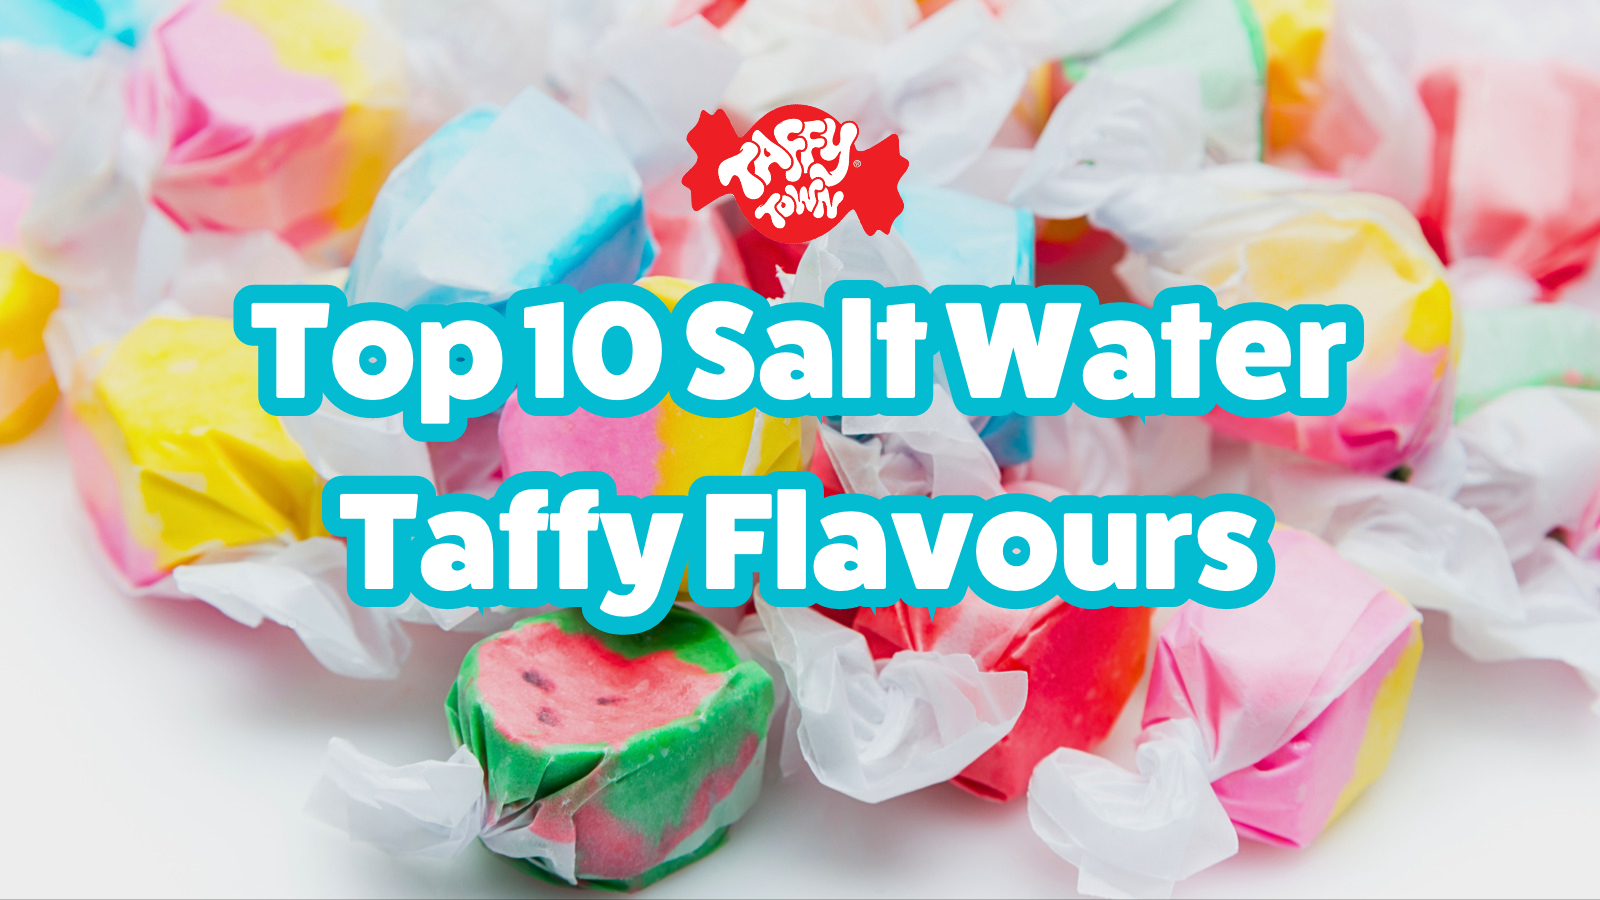 Top 10 Salt Water Taffy to celebrate summer